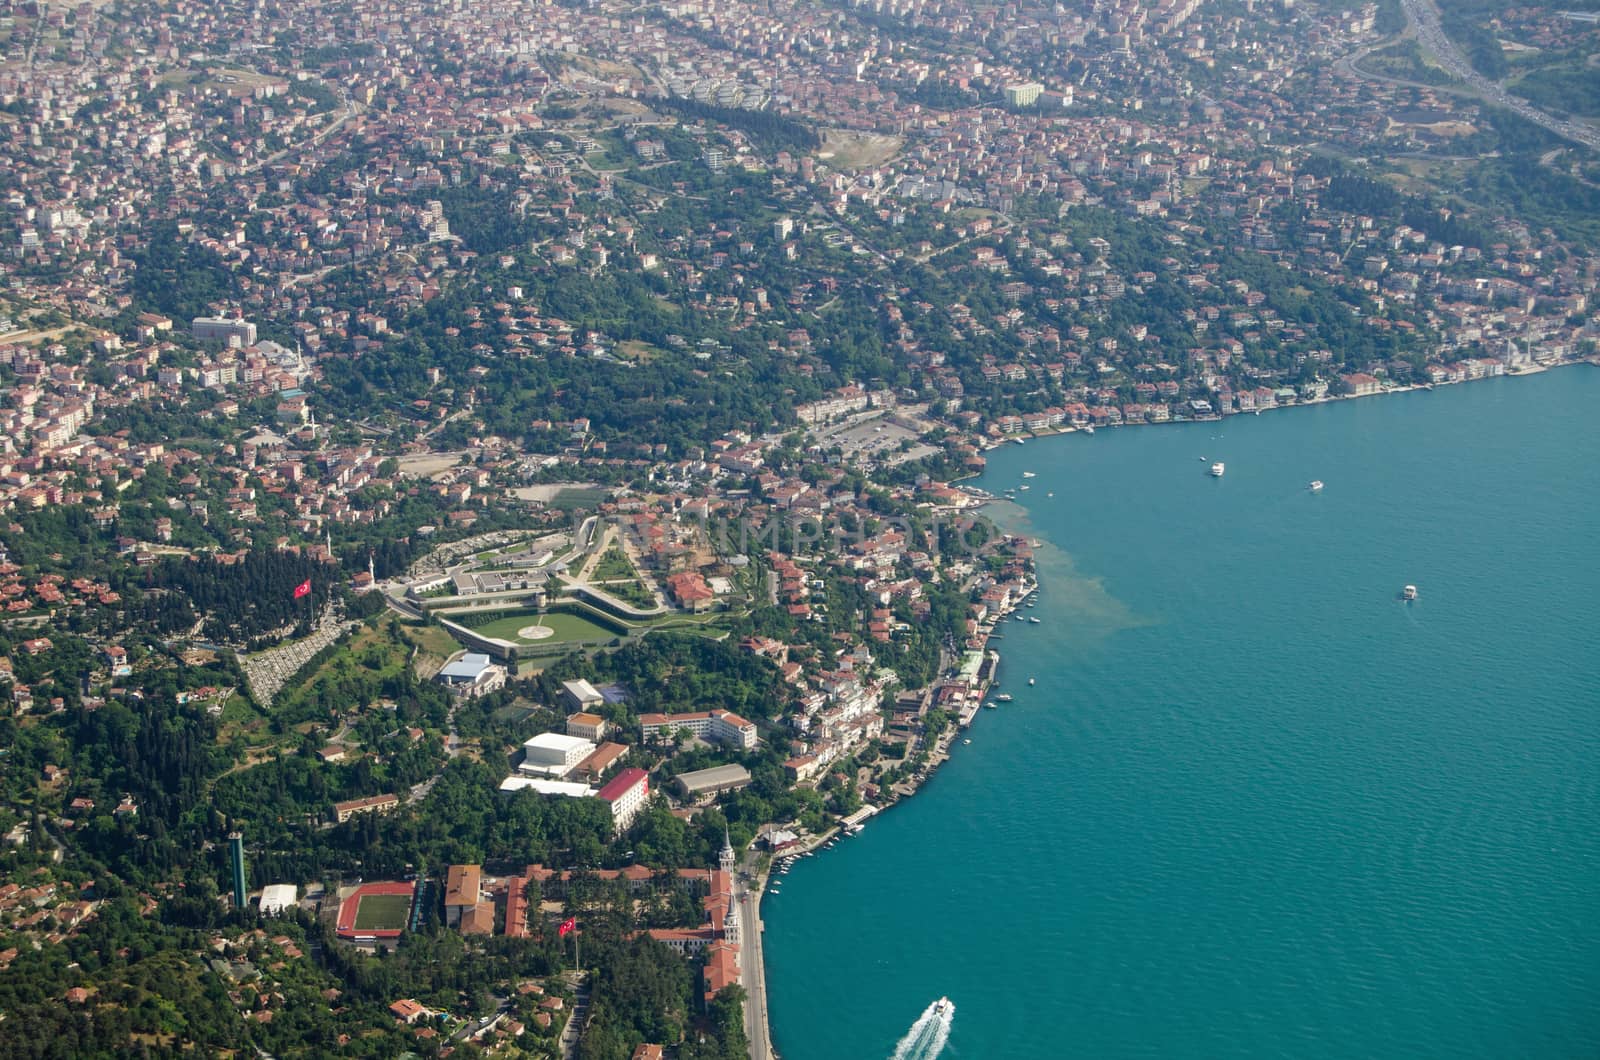 Bosphorus coastline of Istanbul - Asian side by BasPhoto